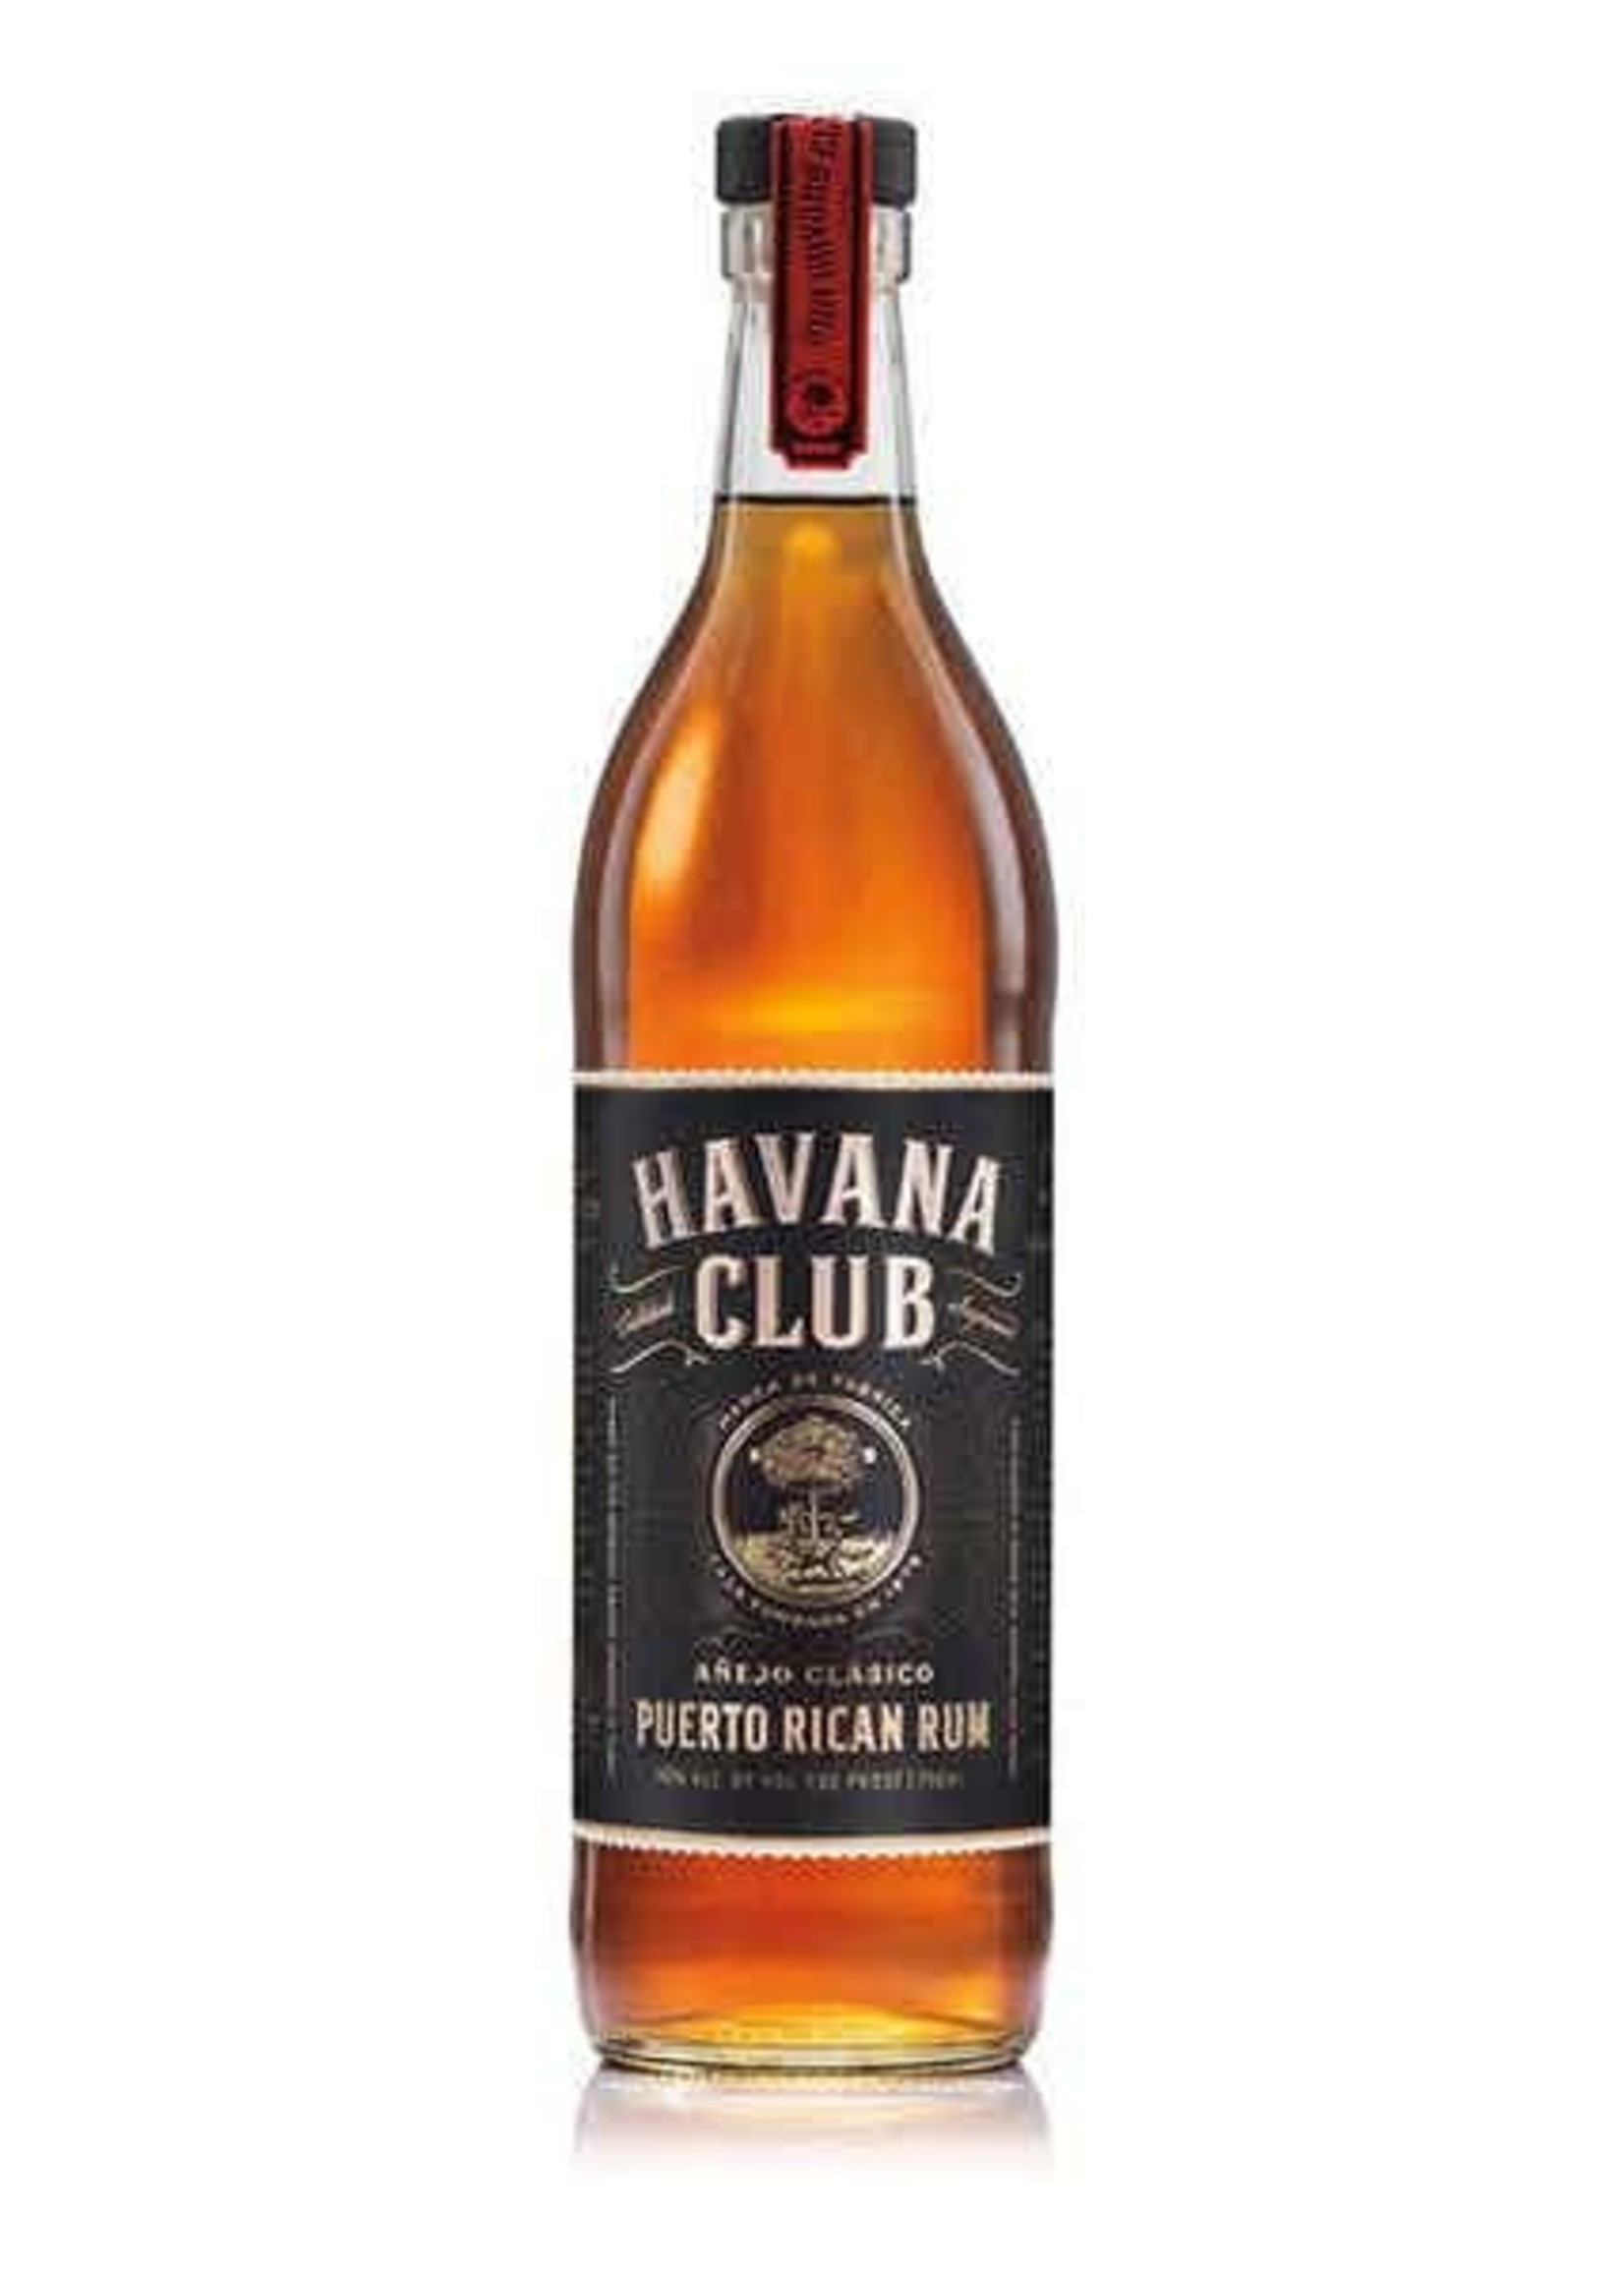 Havana Club Havana Club Anejo Clasico